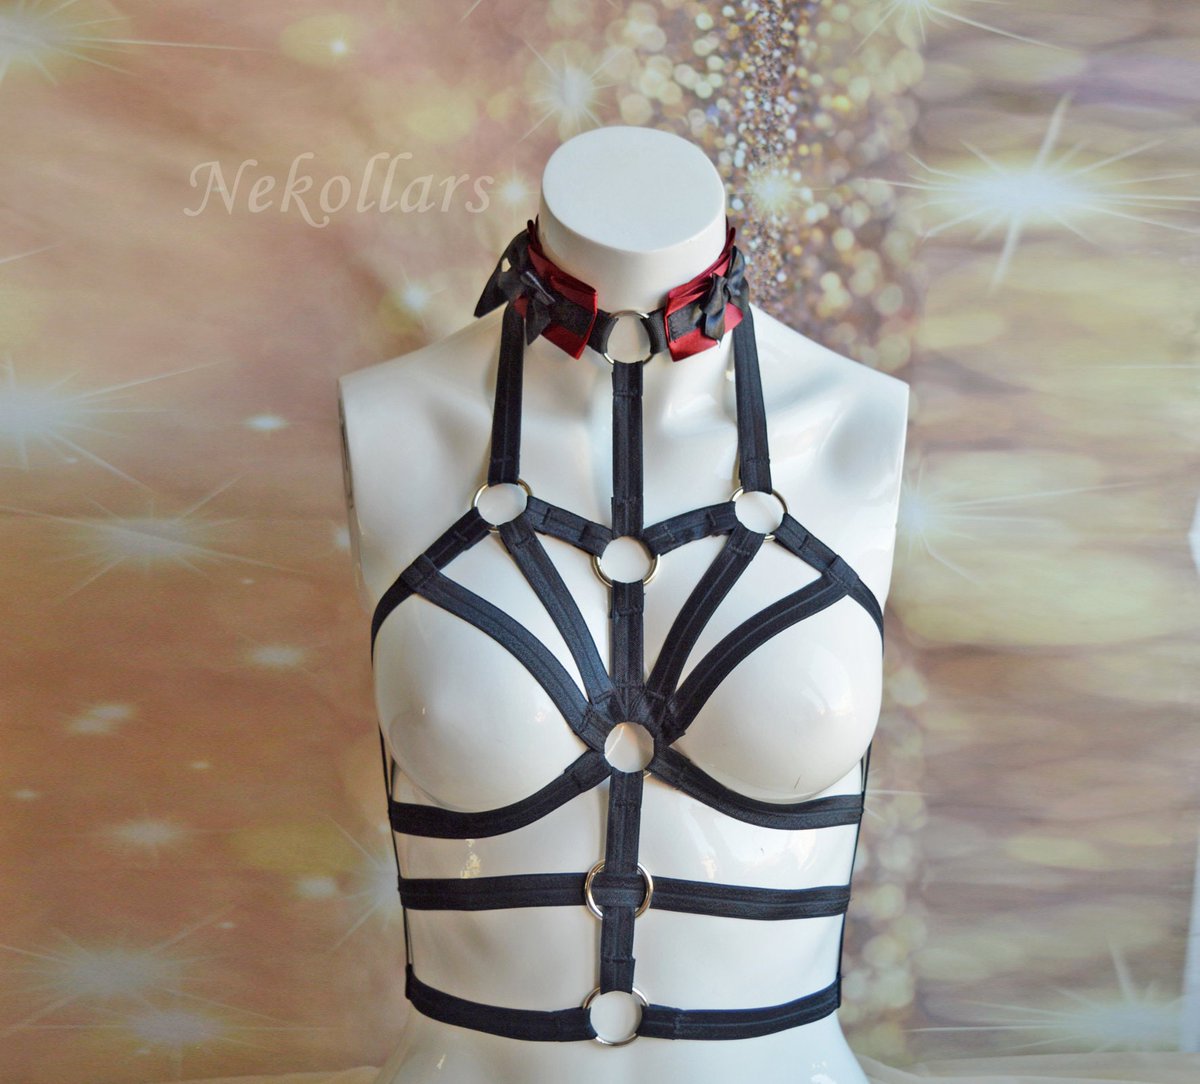 Made to Order - body harness bra - Volaris - gothic elastic cage bra goth sexy kittenplay lingerie - bdsm fetish wear handmade by Nekollars tuppu.net/47b03eda #Nekollars #Etsy #FetishLingerie